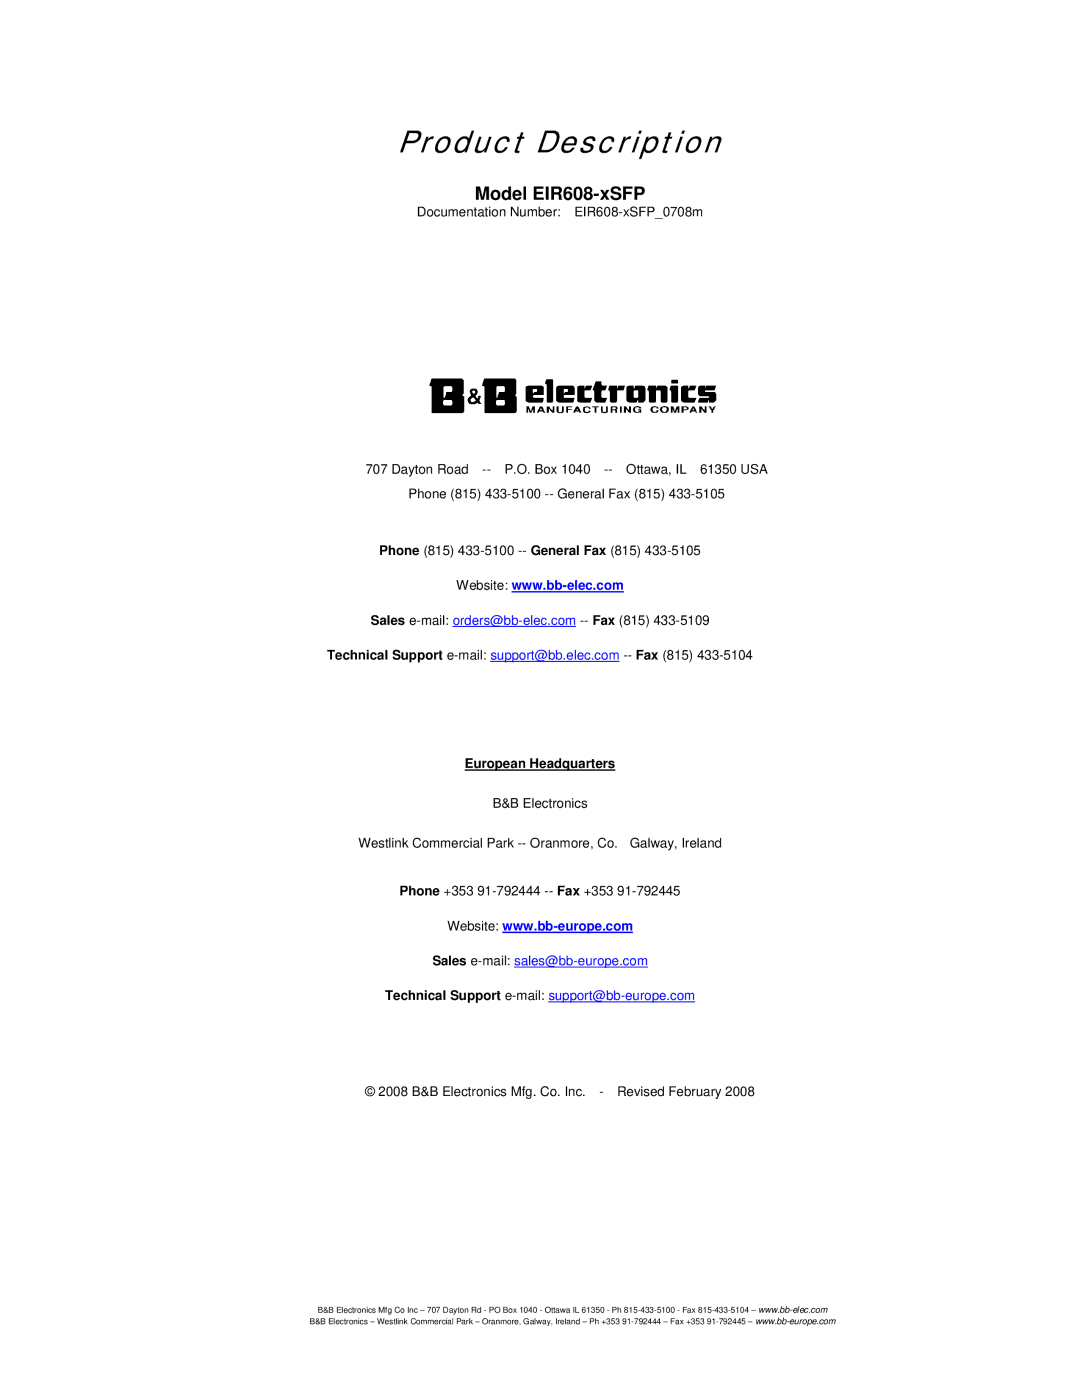 B&B Electronics EIR608-xSFP manual Product Description 